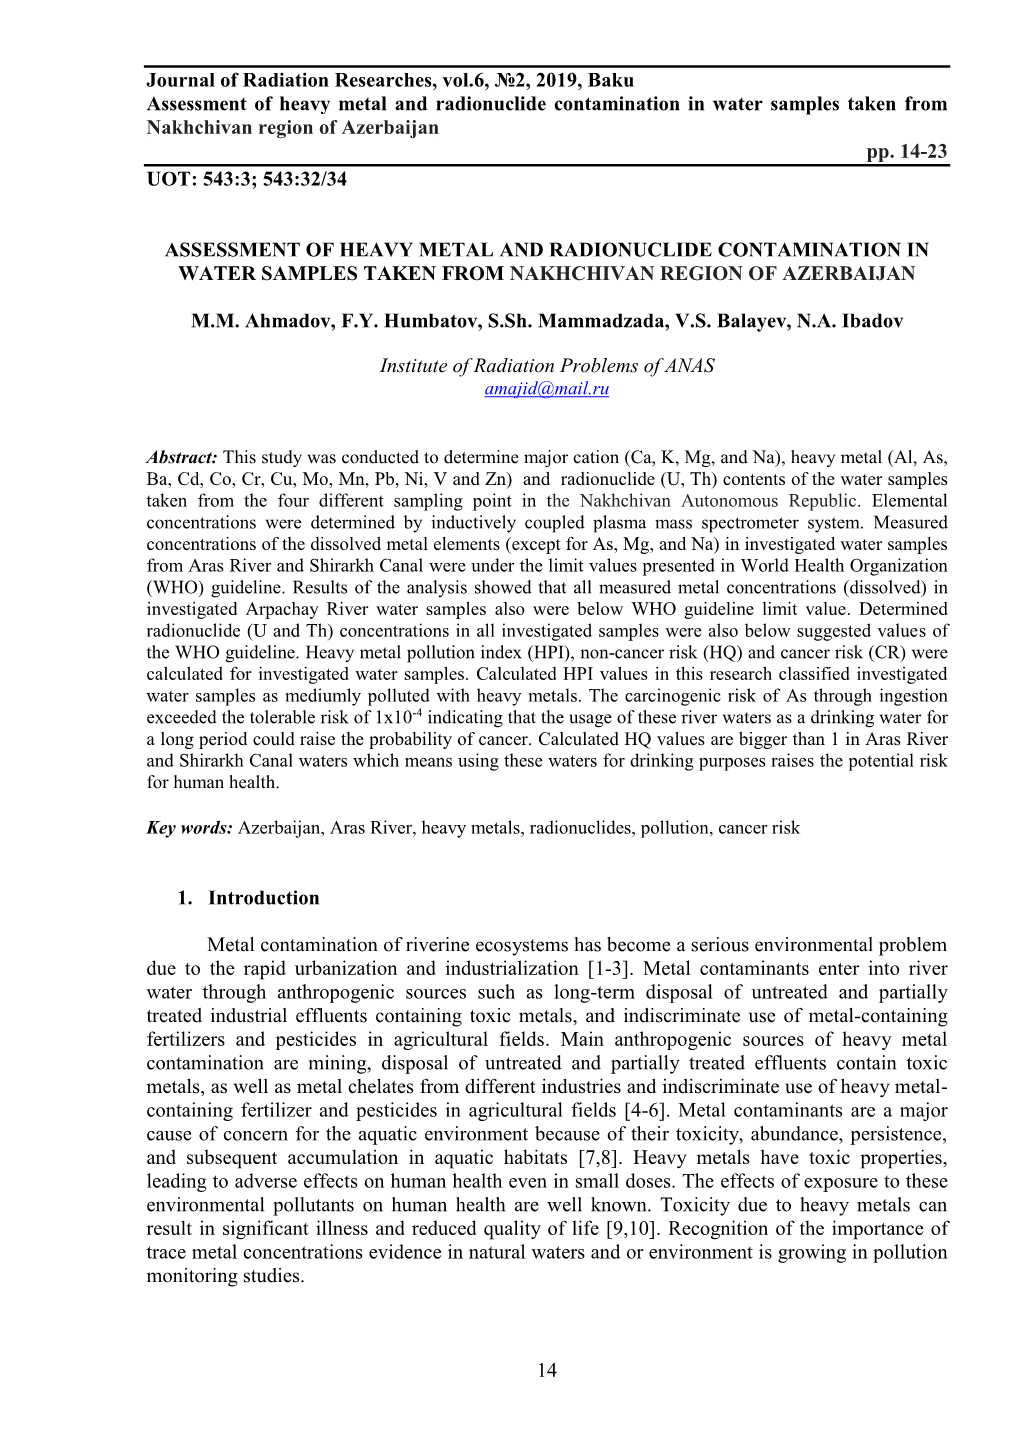 Journal of Radiation Researches, Vol.6, №2, 2019, Baku Assessment